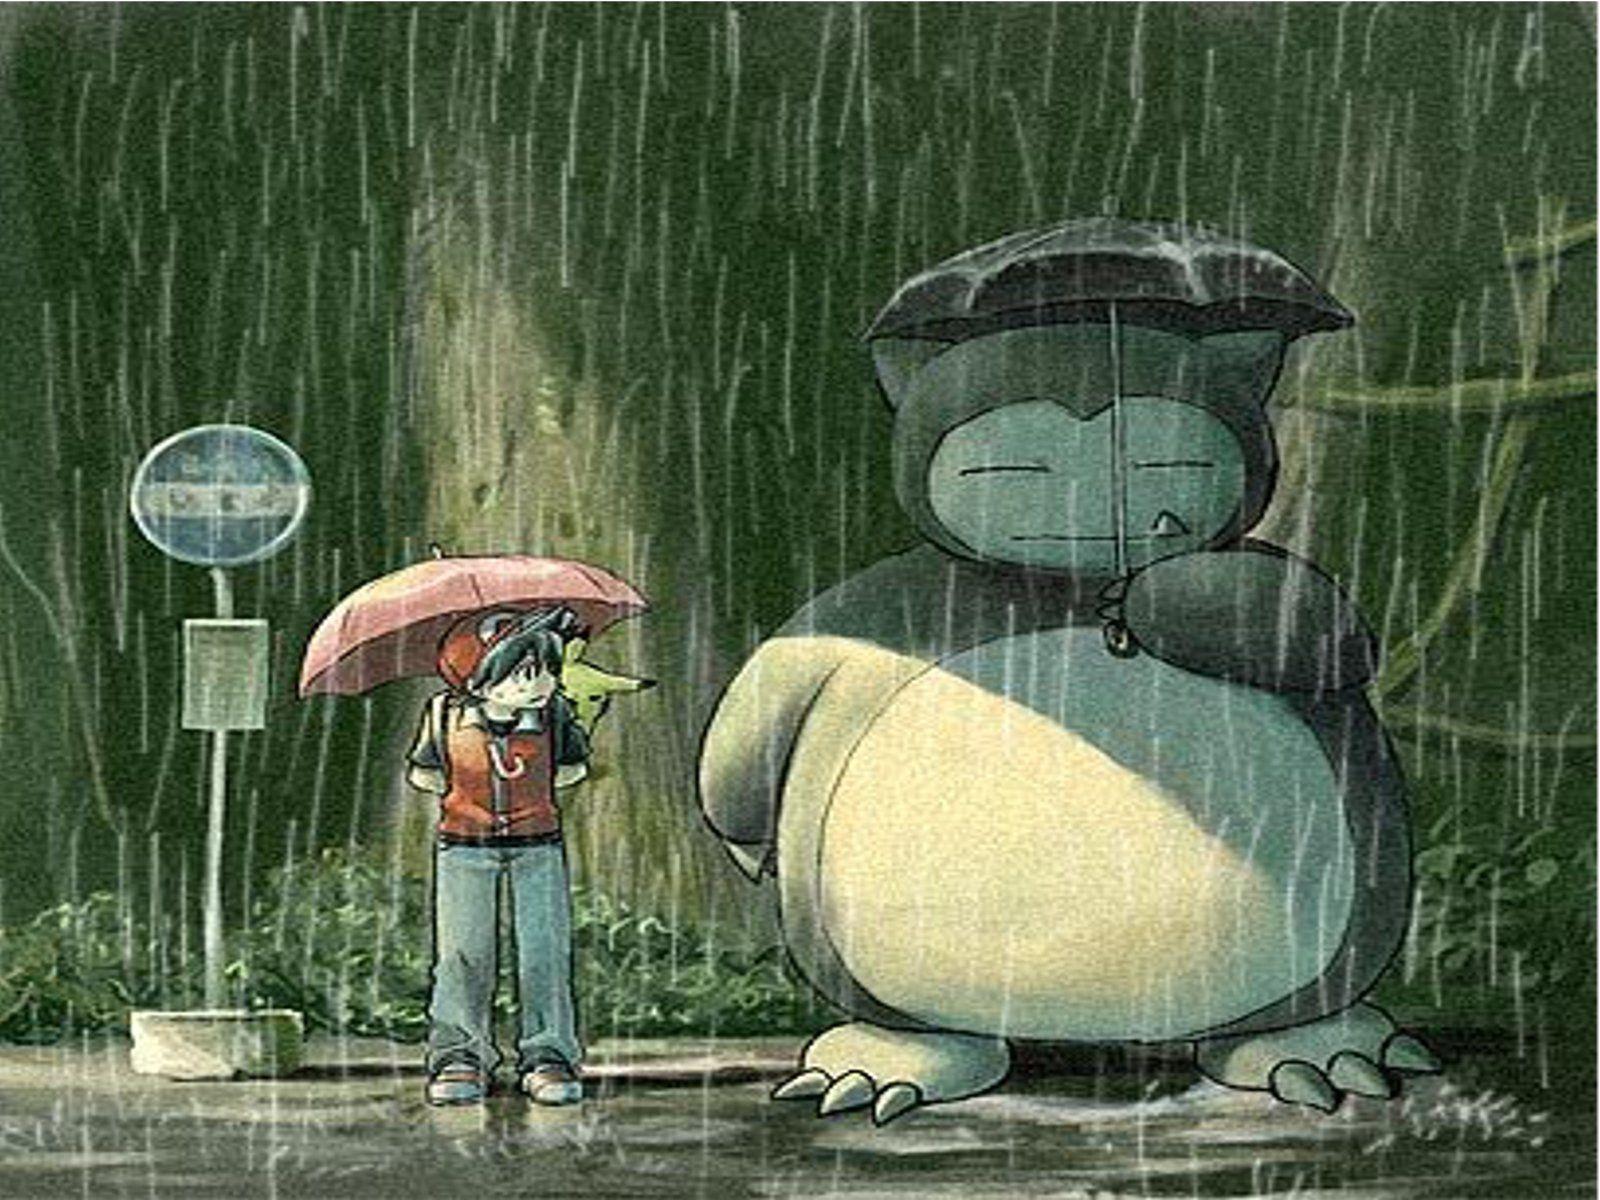 Pokemon rain Totoro parody Snorlax bus stop umbrellas wallpaper